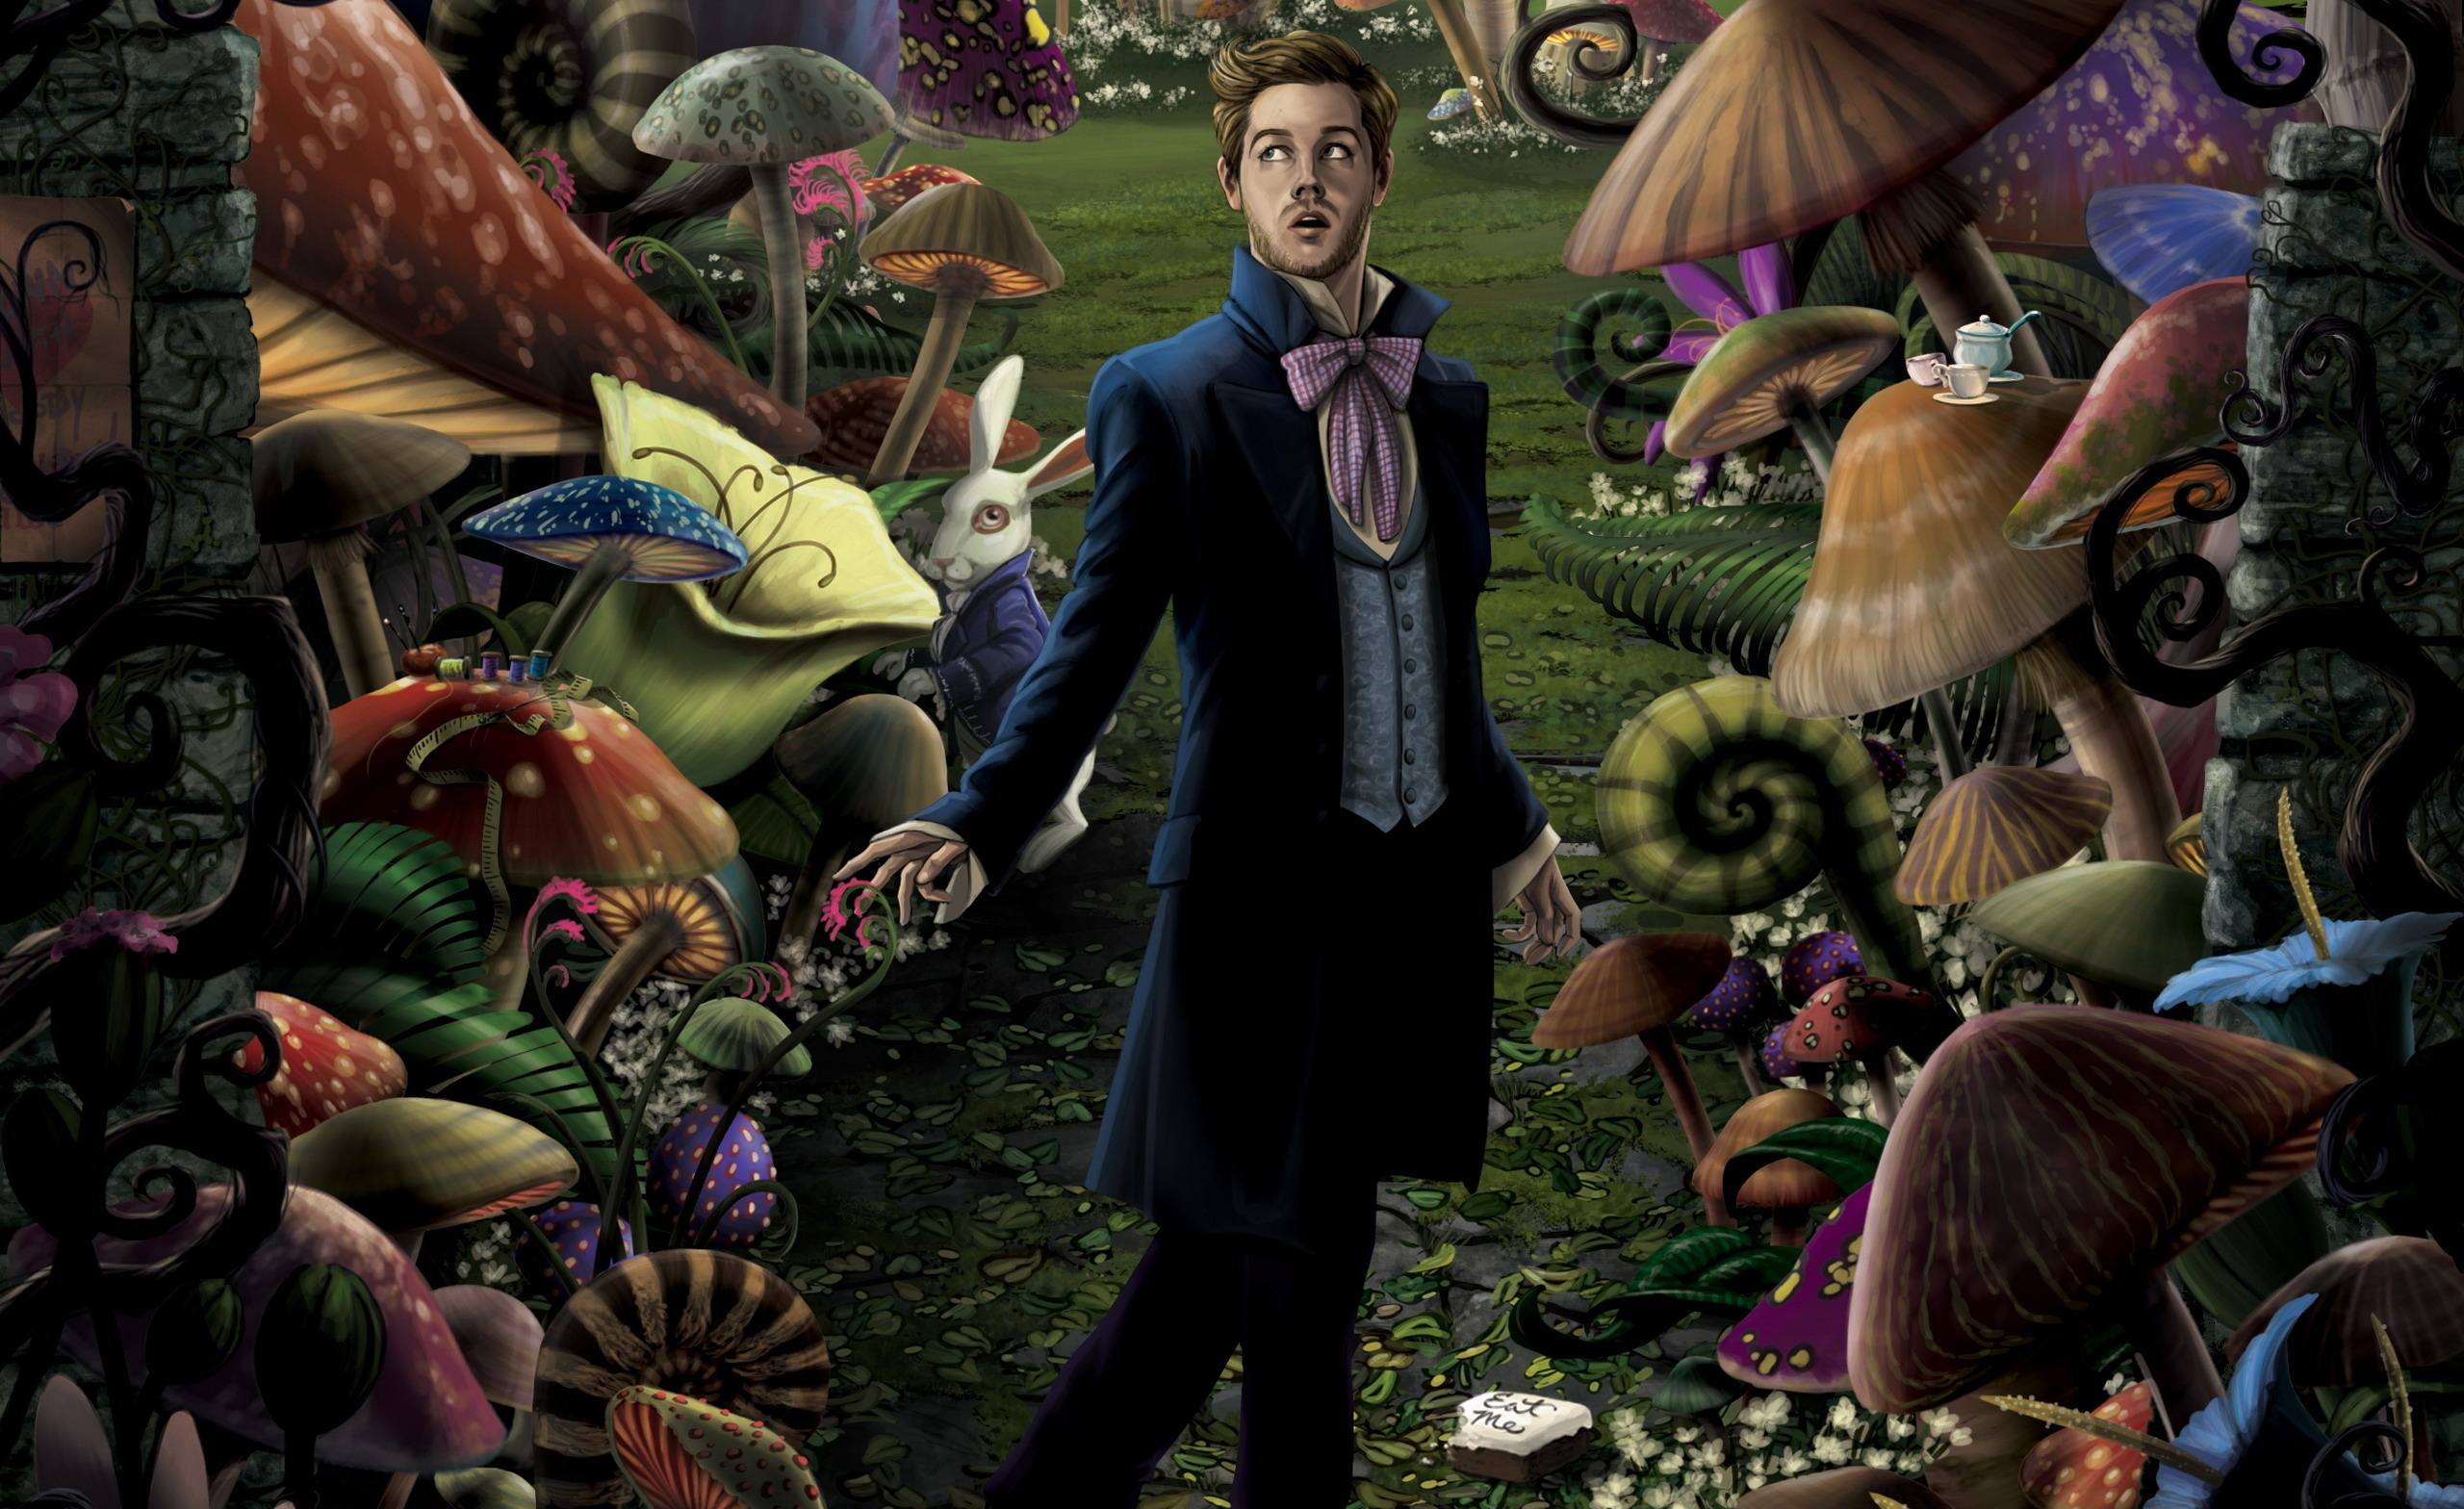 Movie Alice in Wonderland (2010) HD Wallpaper Background Image. 